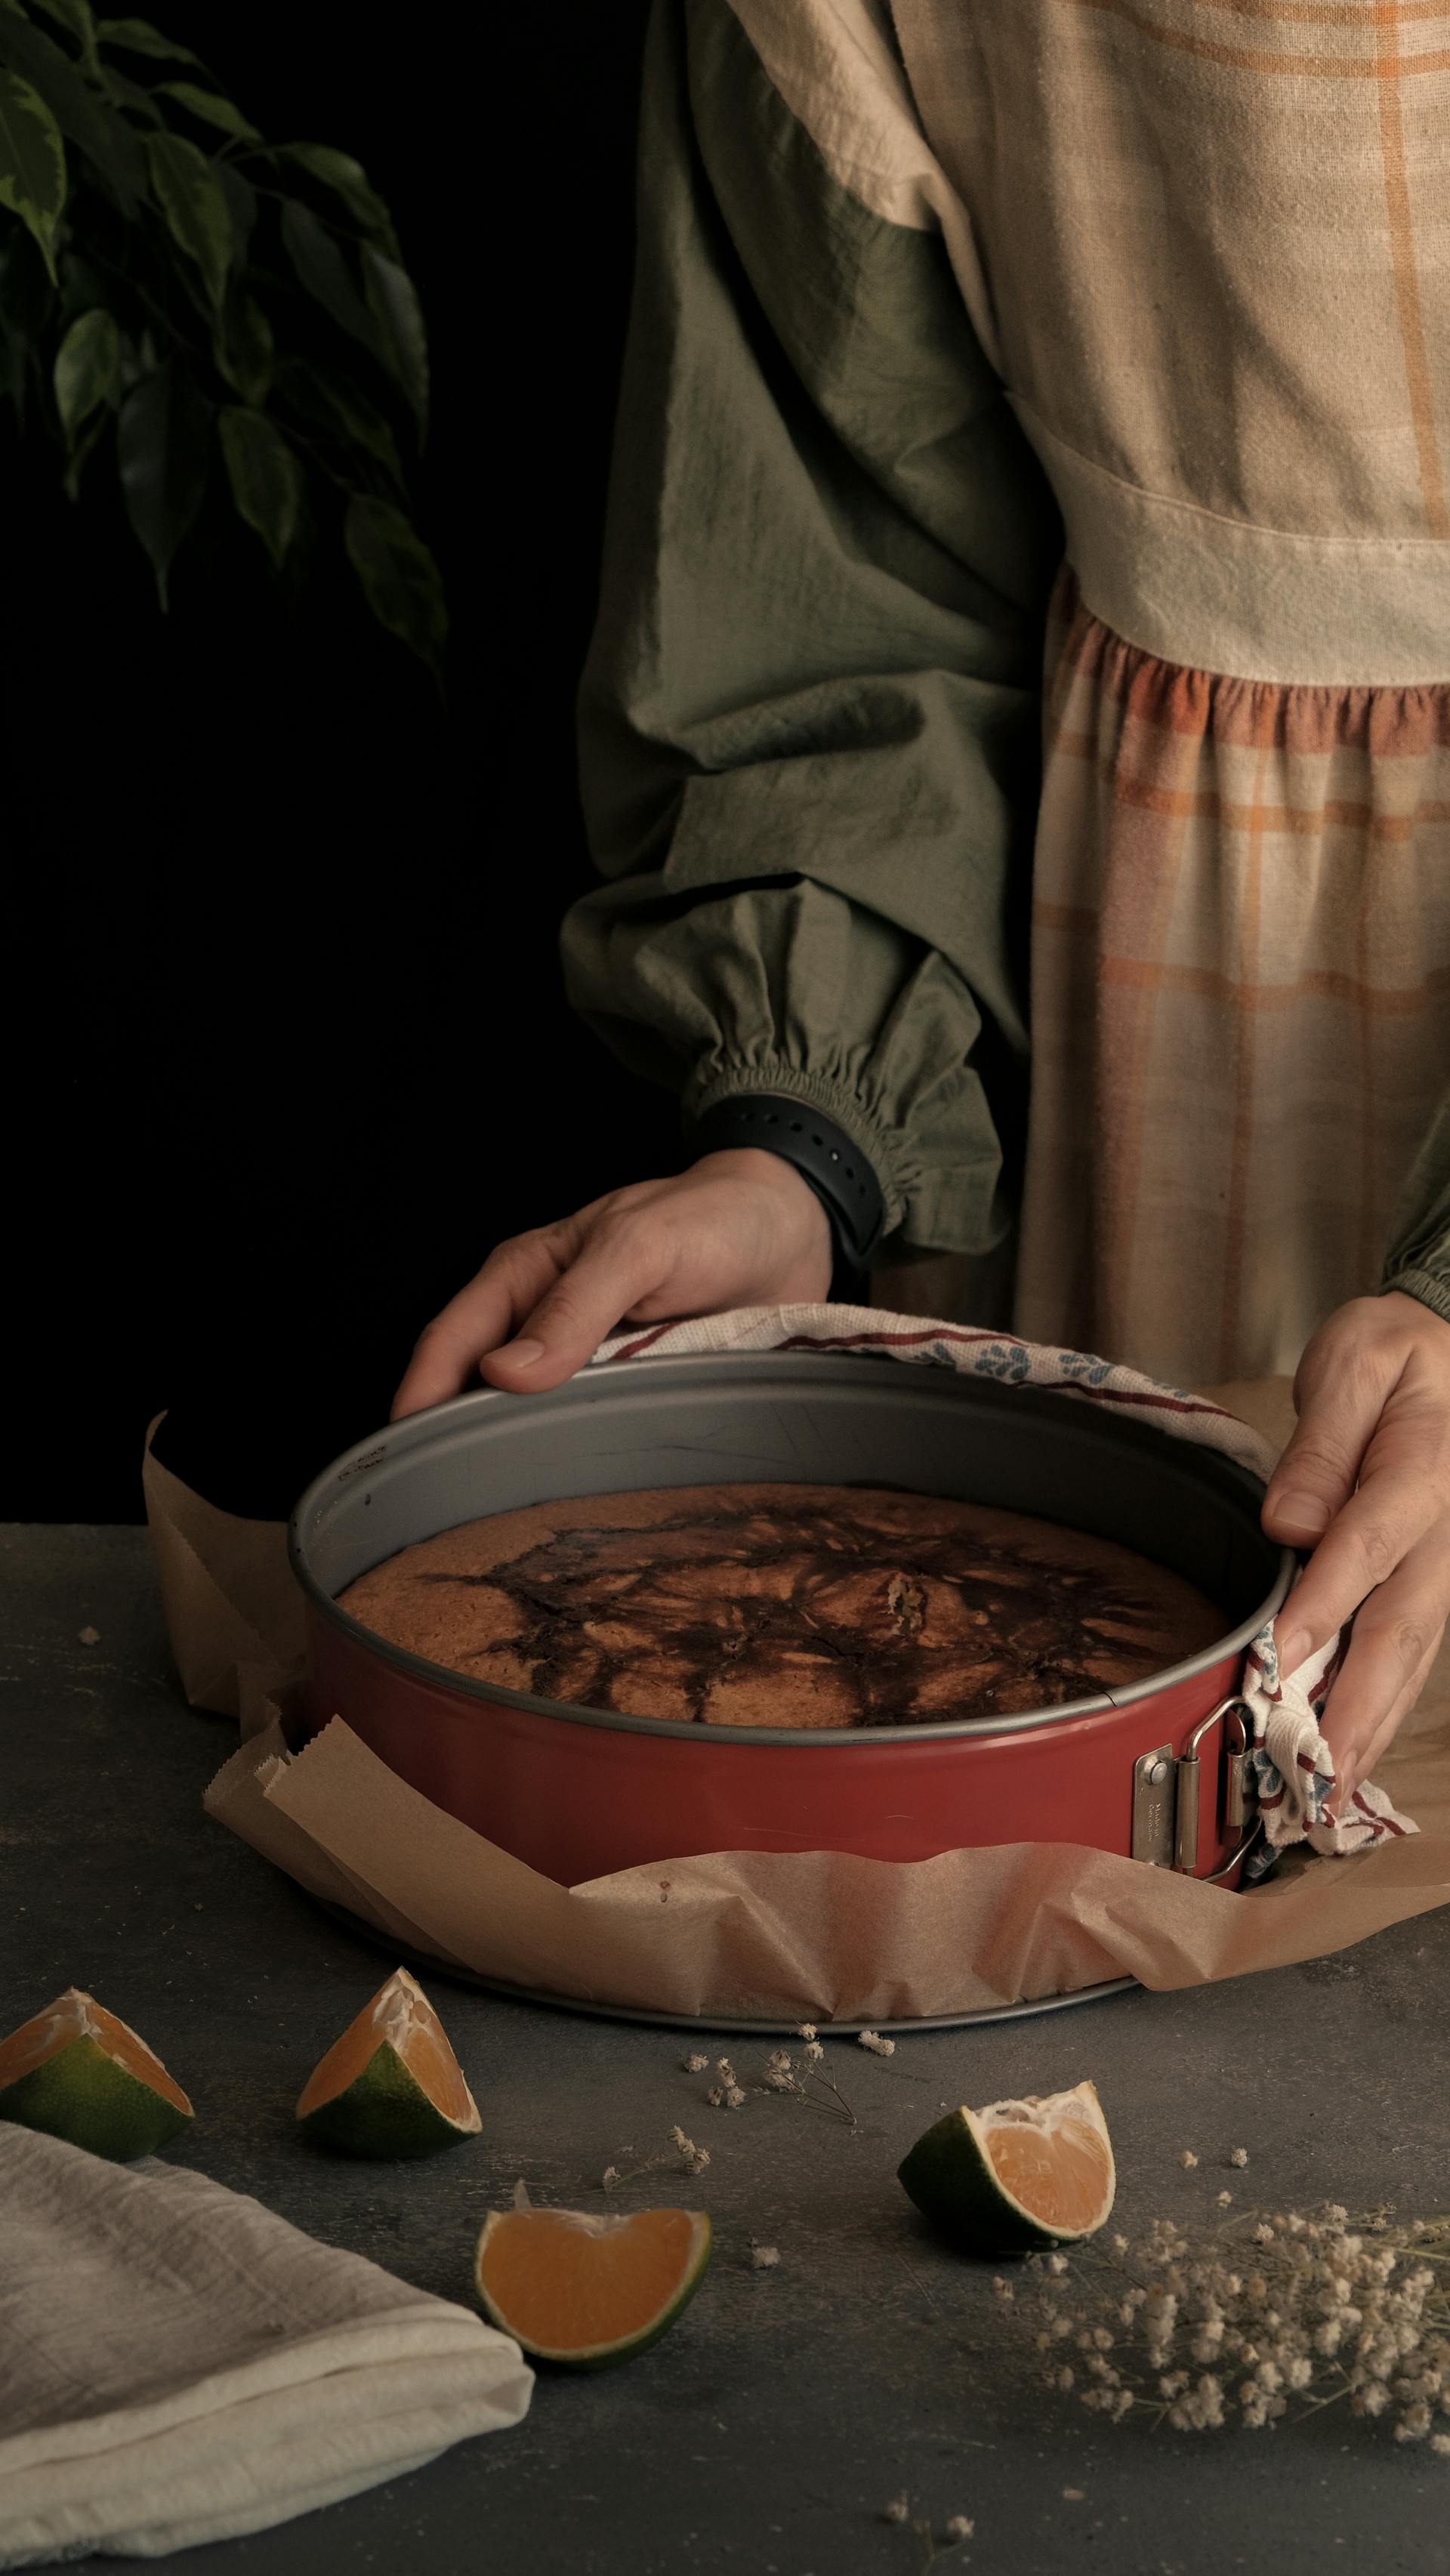 A close-up of a woman preparing a cake | Source: Pexels